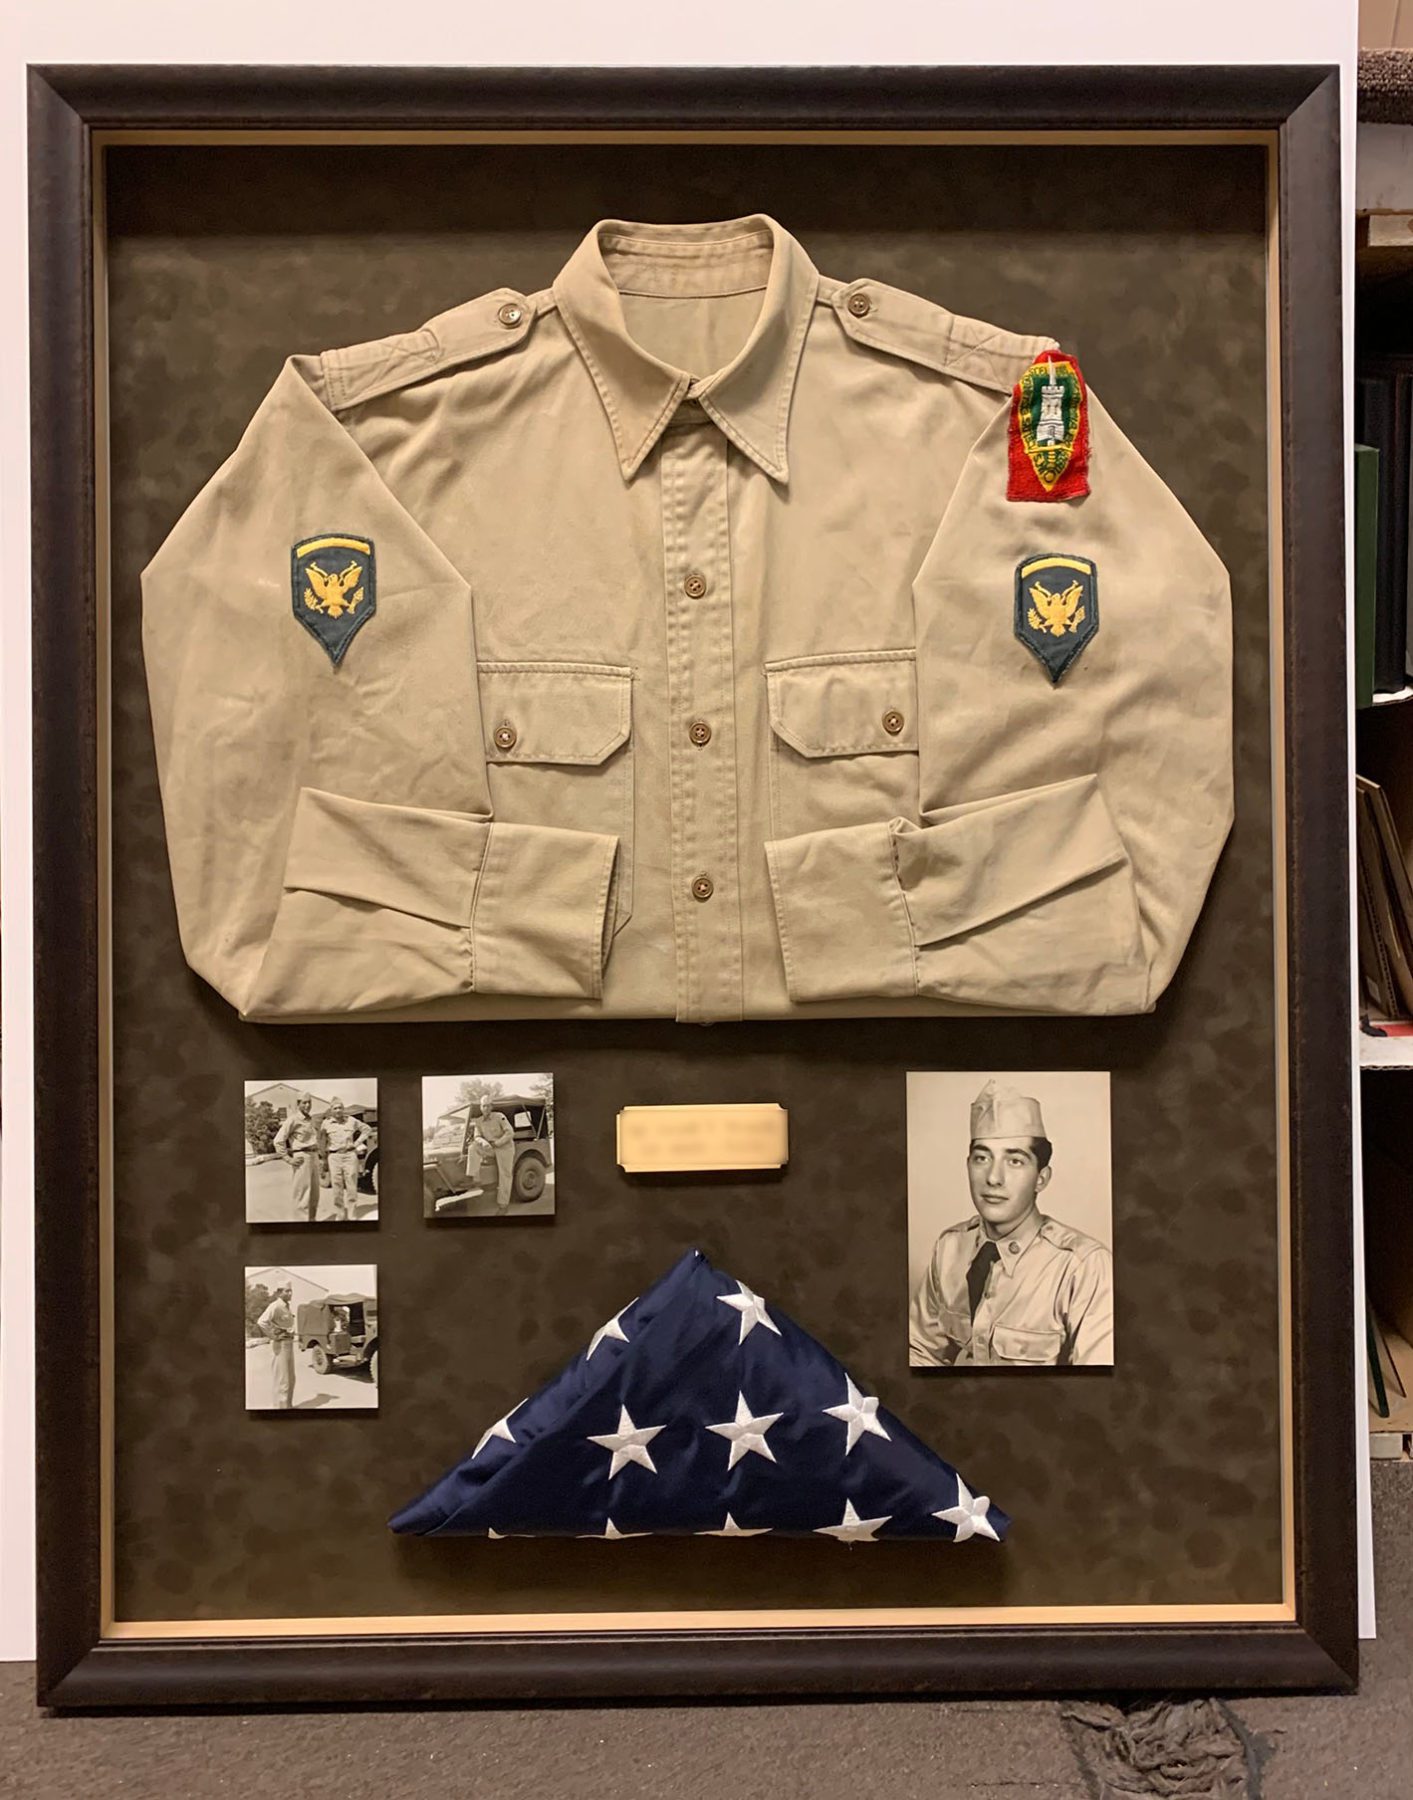 Uniform Framing from Badge Frame